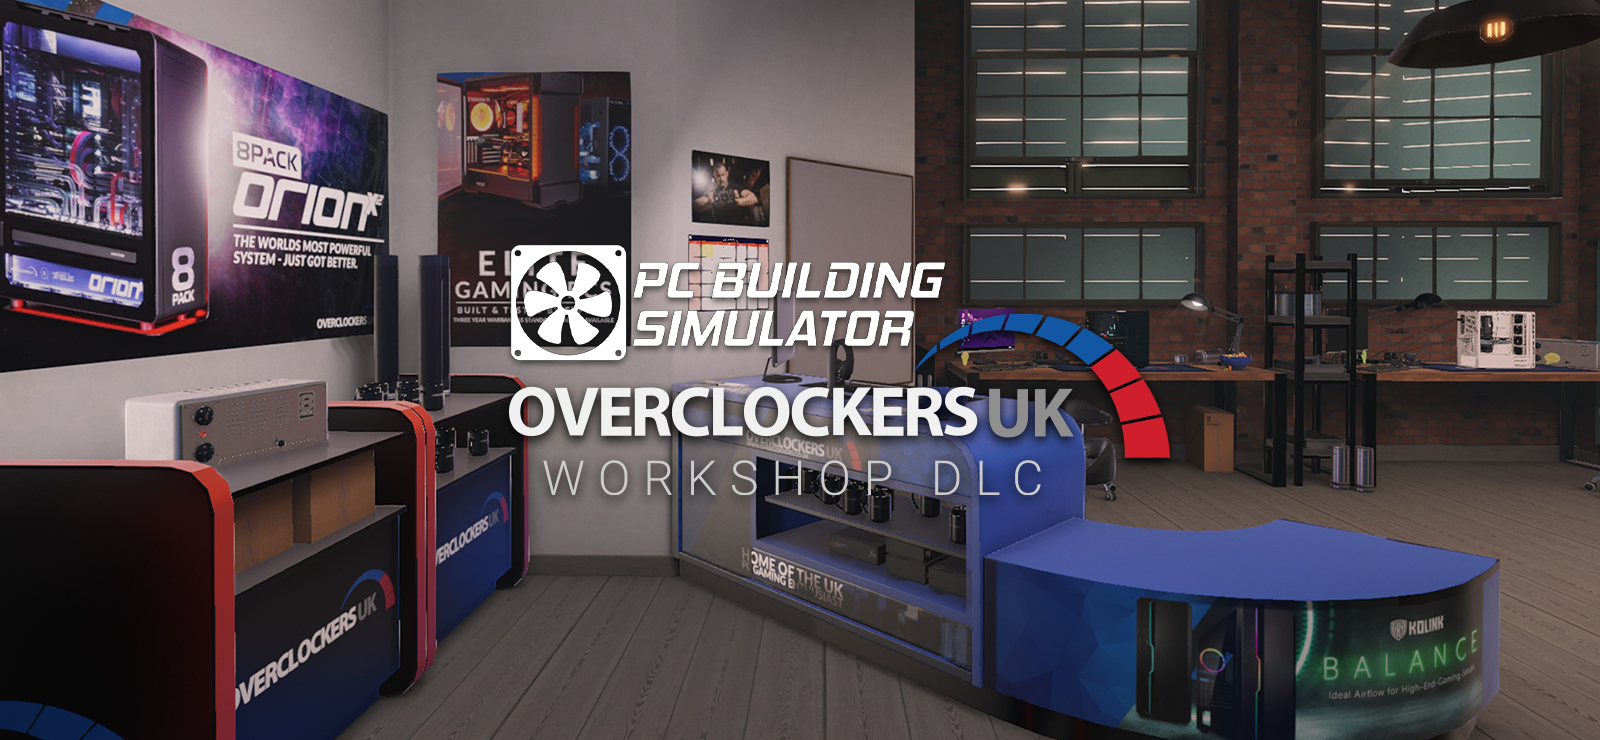 PC Building Simulator – Overclockers UK Workshop